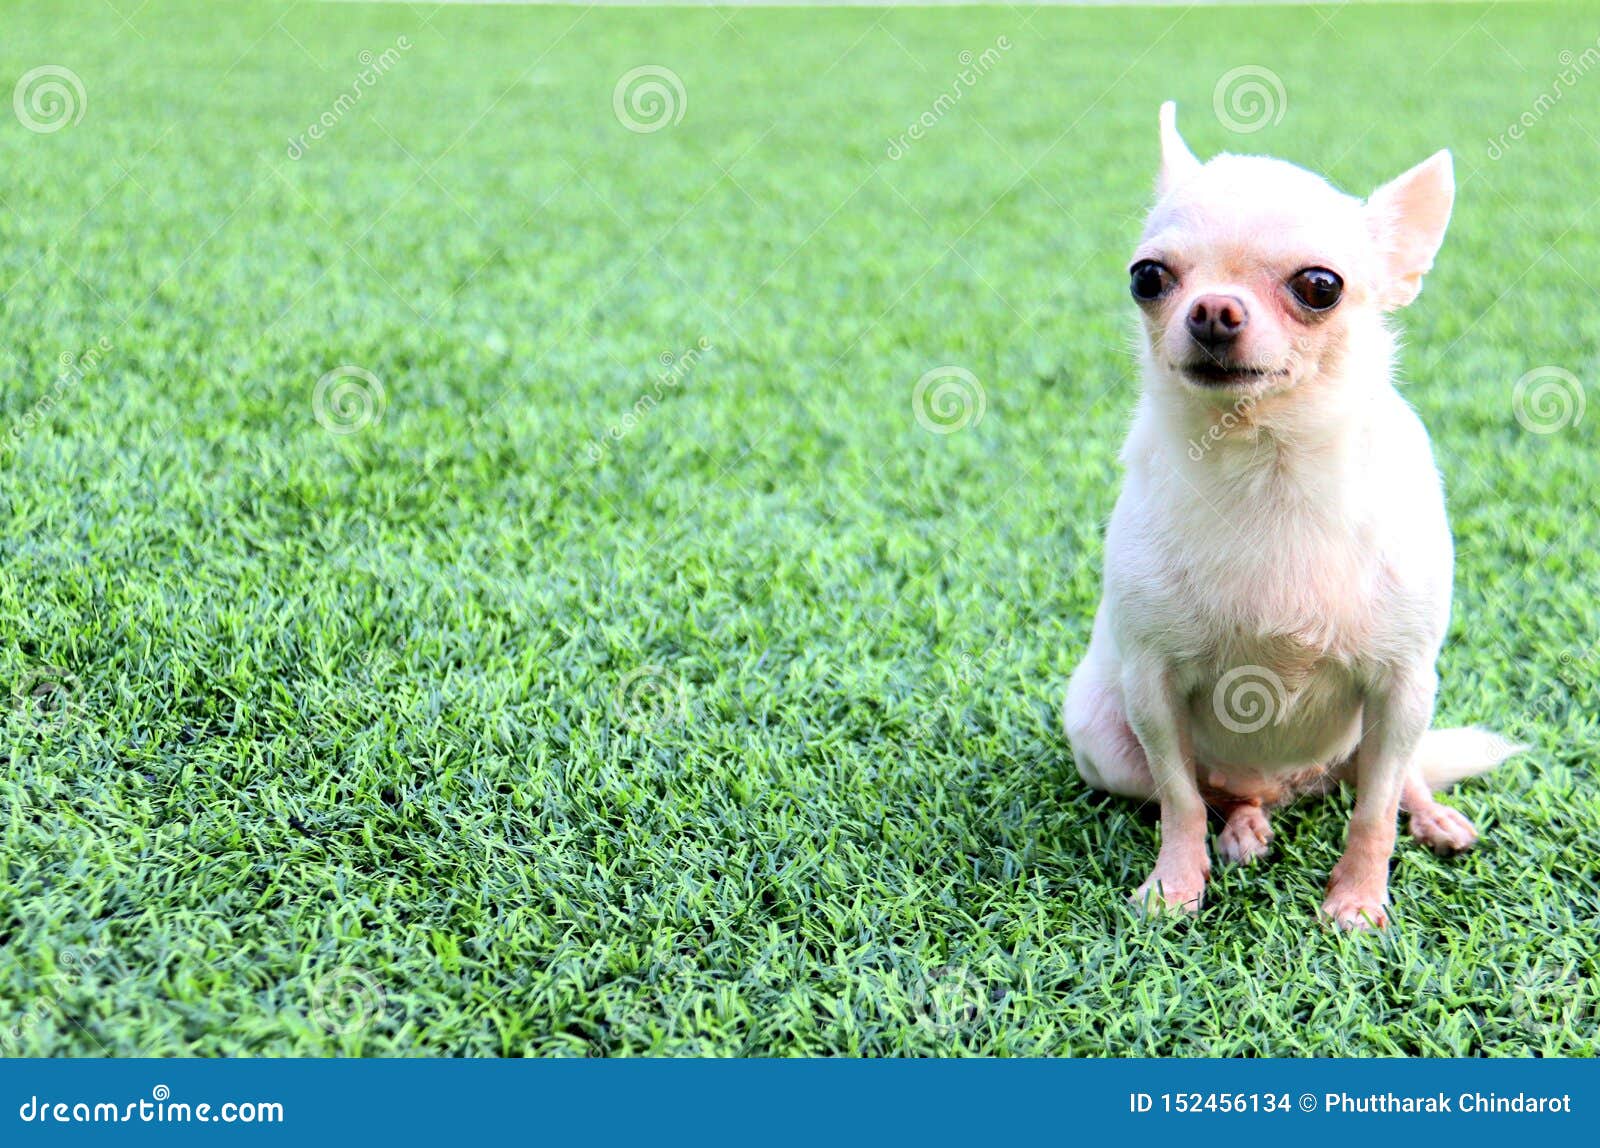 White Short Hair Cute Chihuahua Dog Sit On The Green Grass